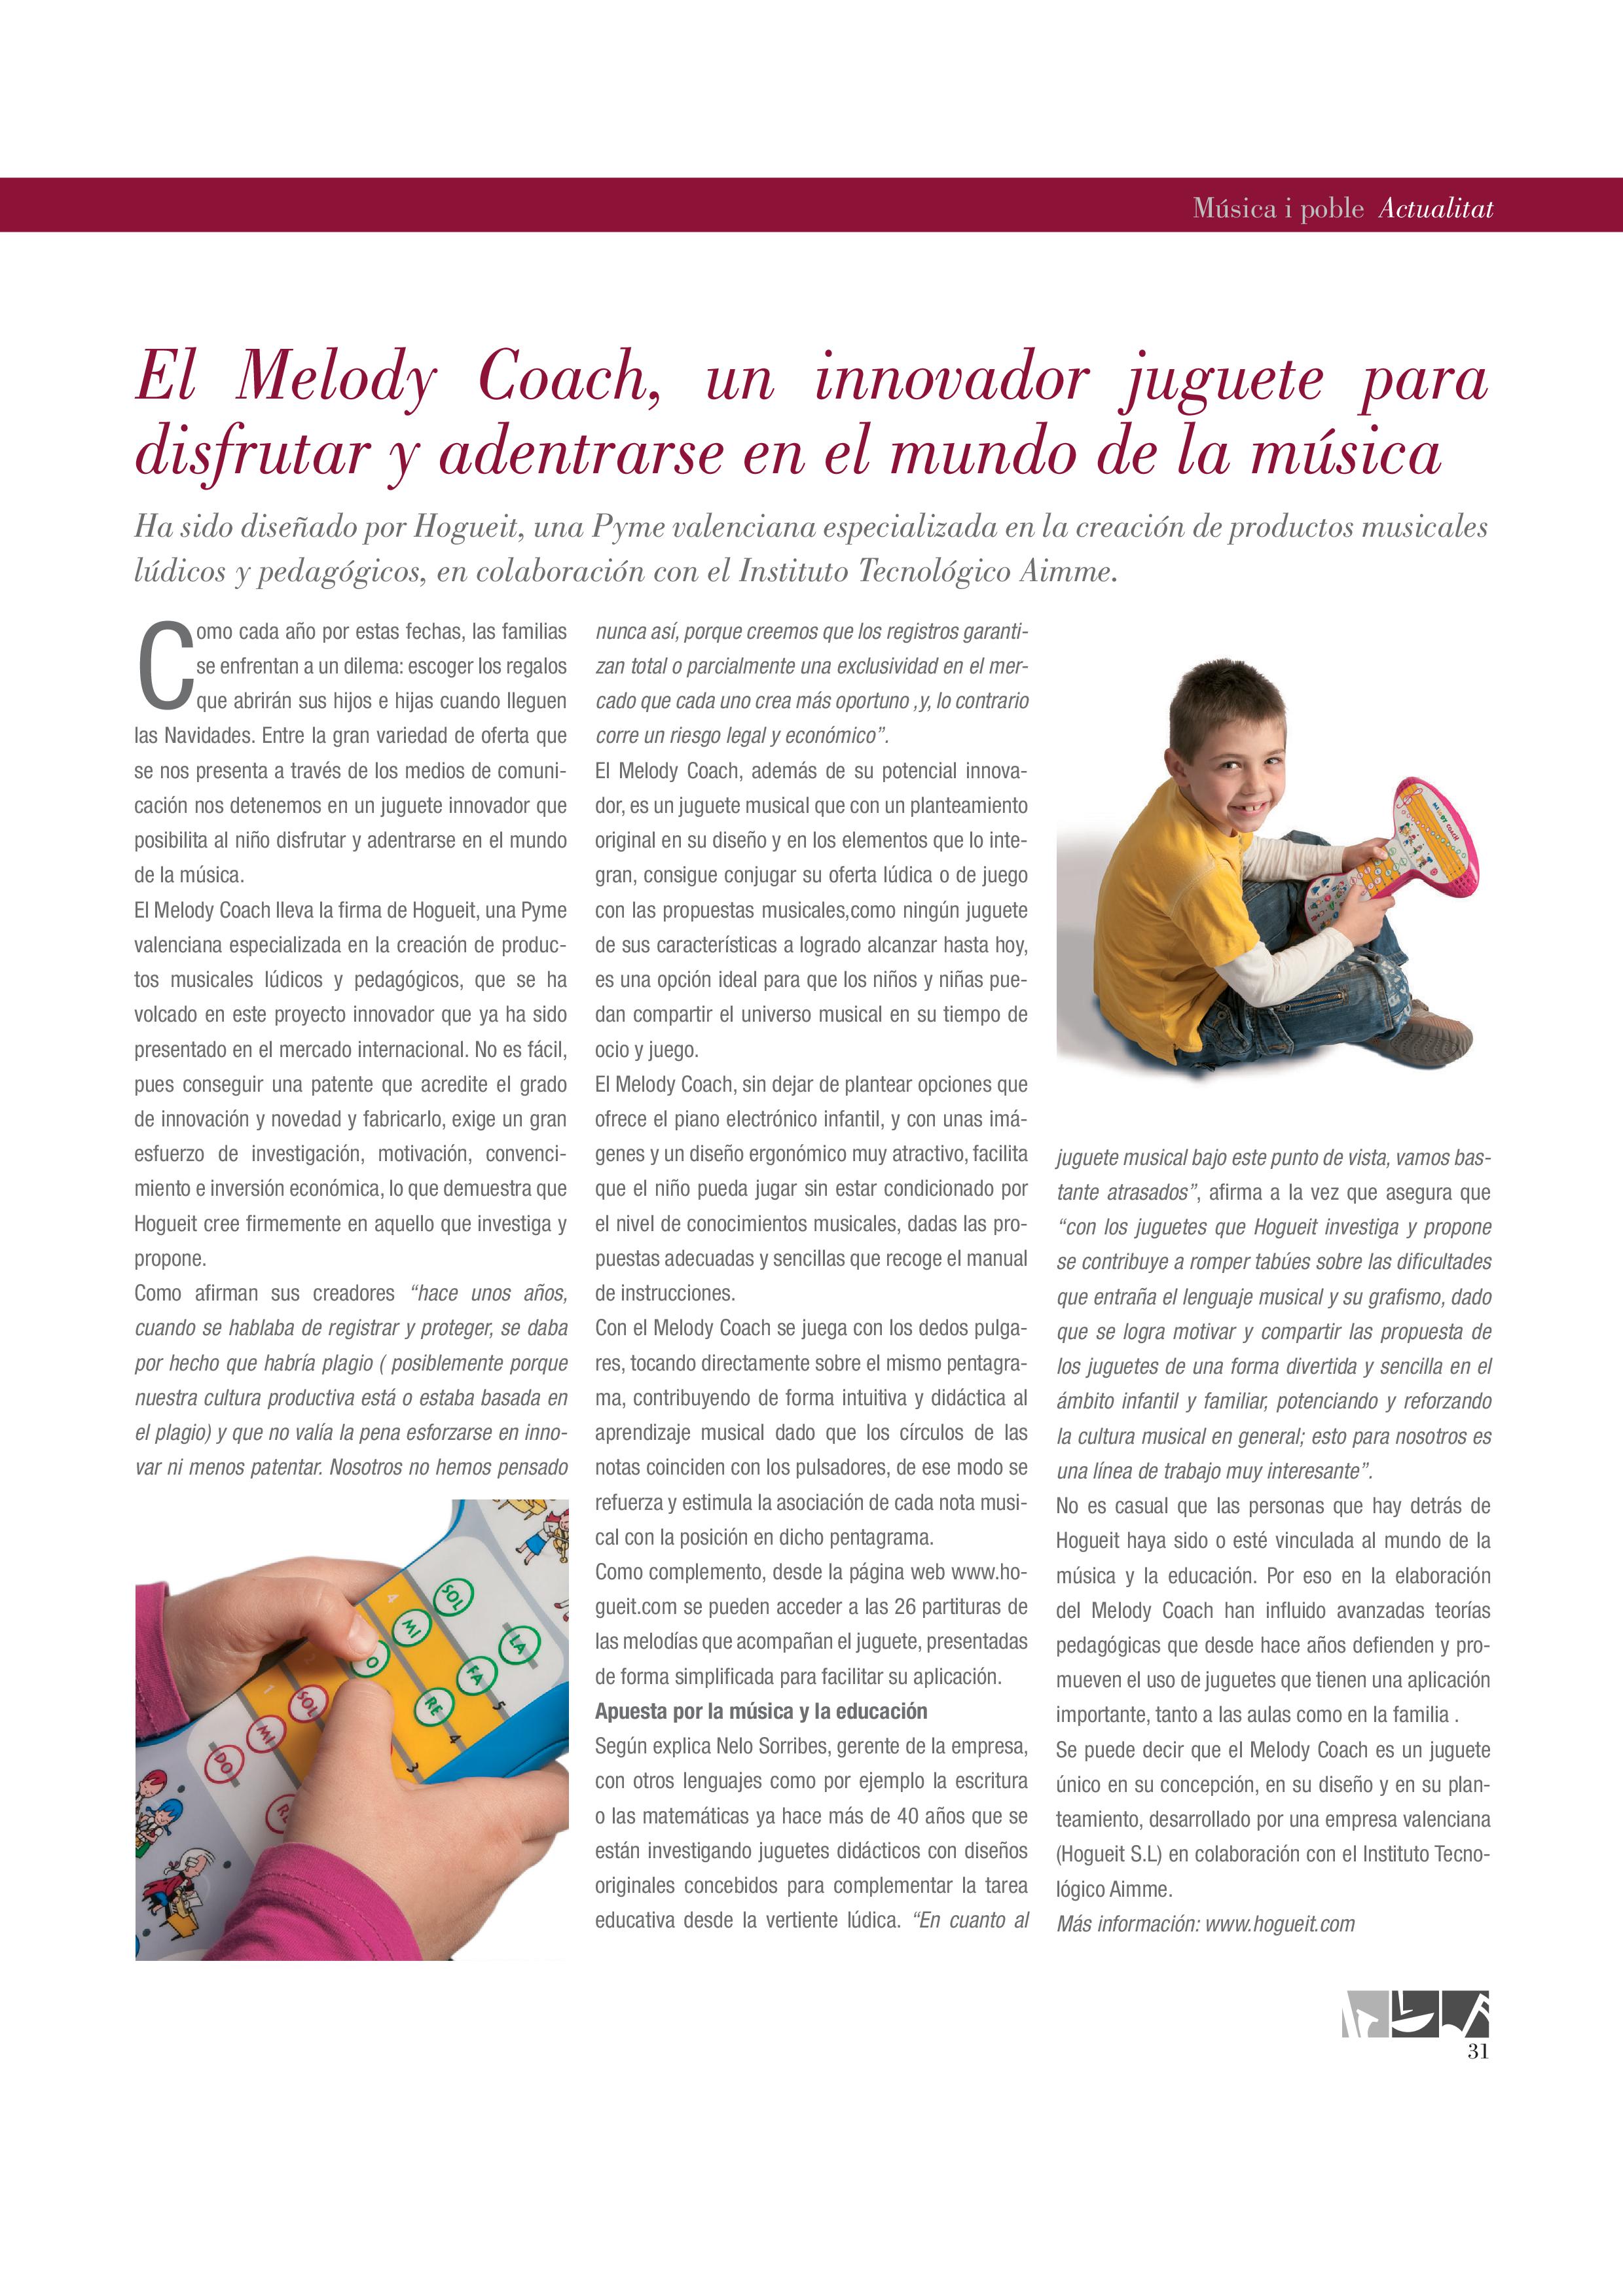 Melody Coach en la Revista MÚSICA I POBLE